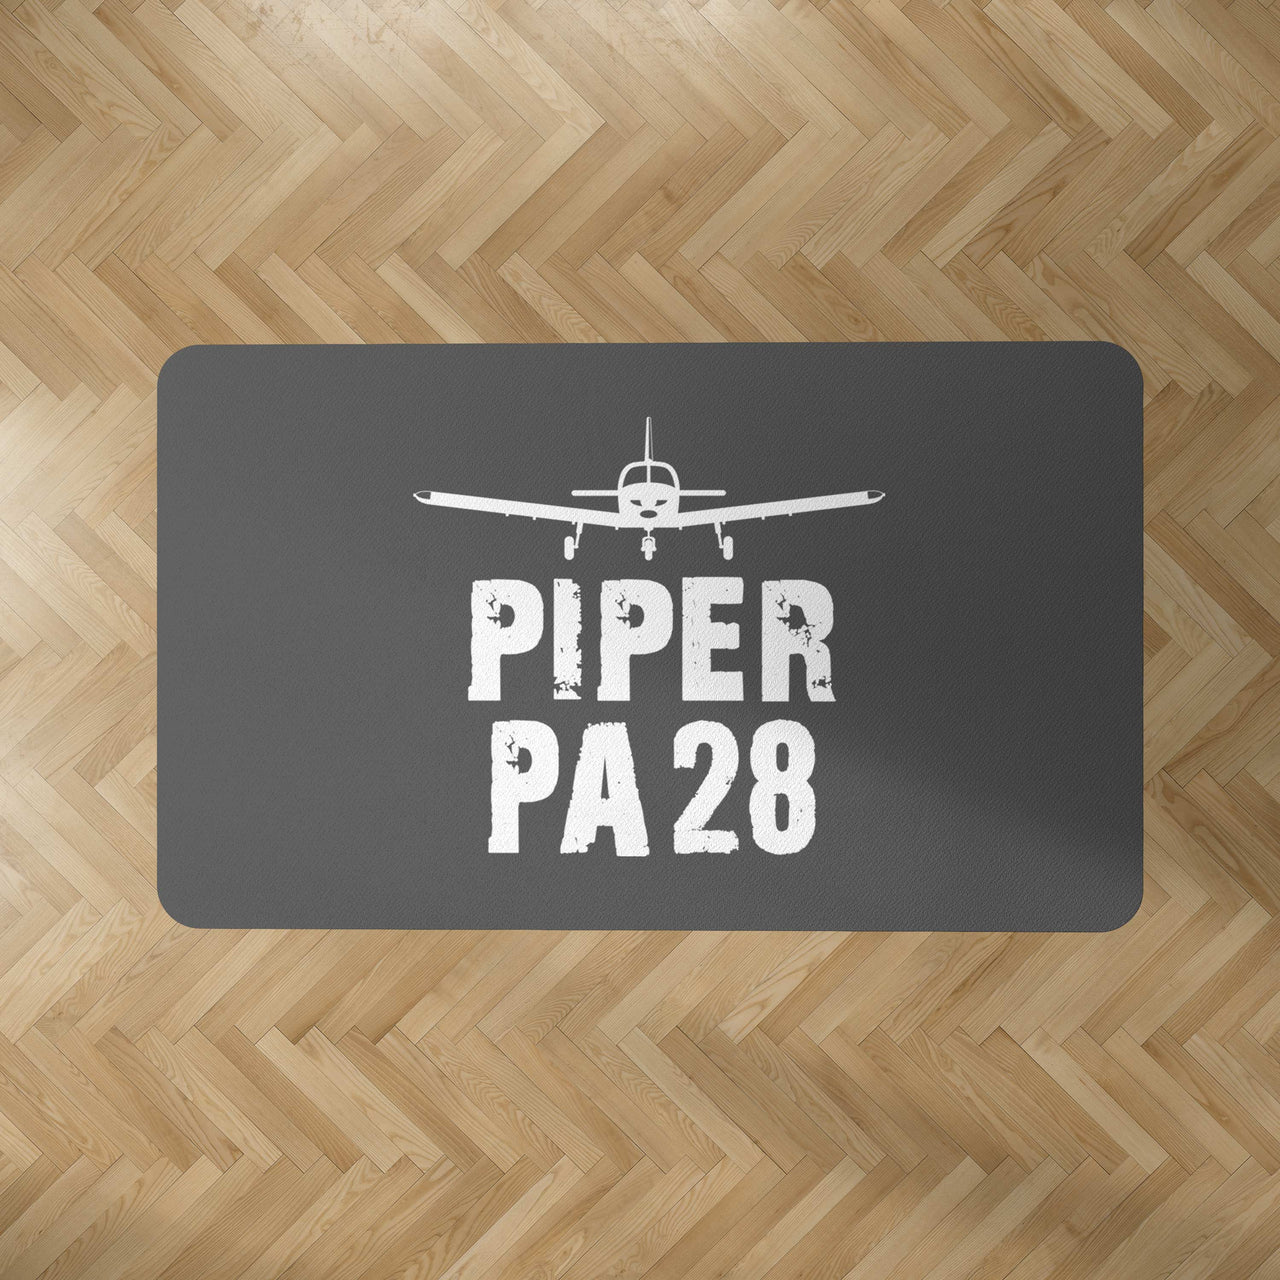 Piper PA28 & Plane Designed Carpet & Floor Mats